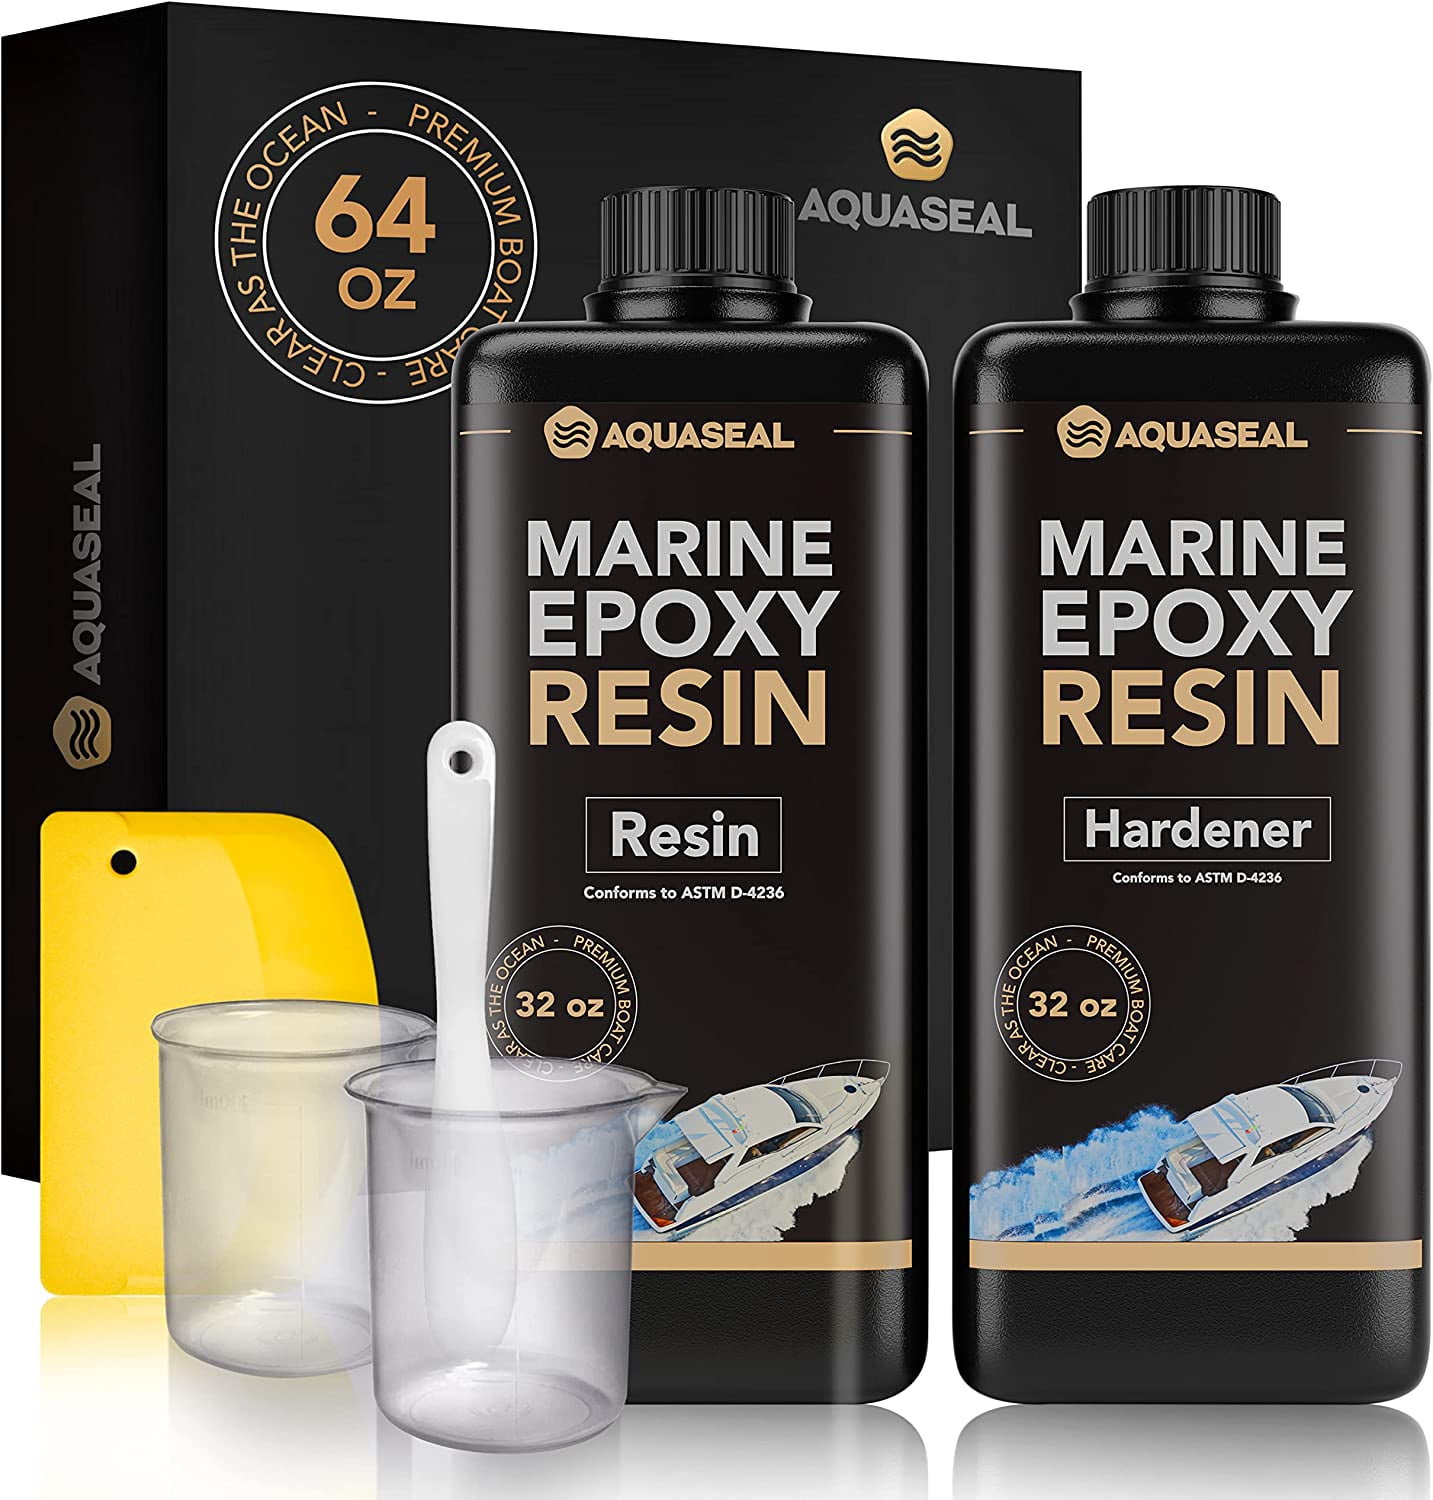 Sea Clear Epoxy Resin for Resinart - Bestista